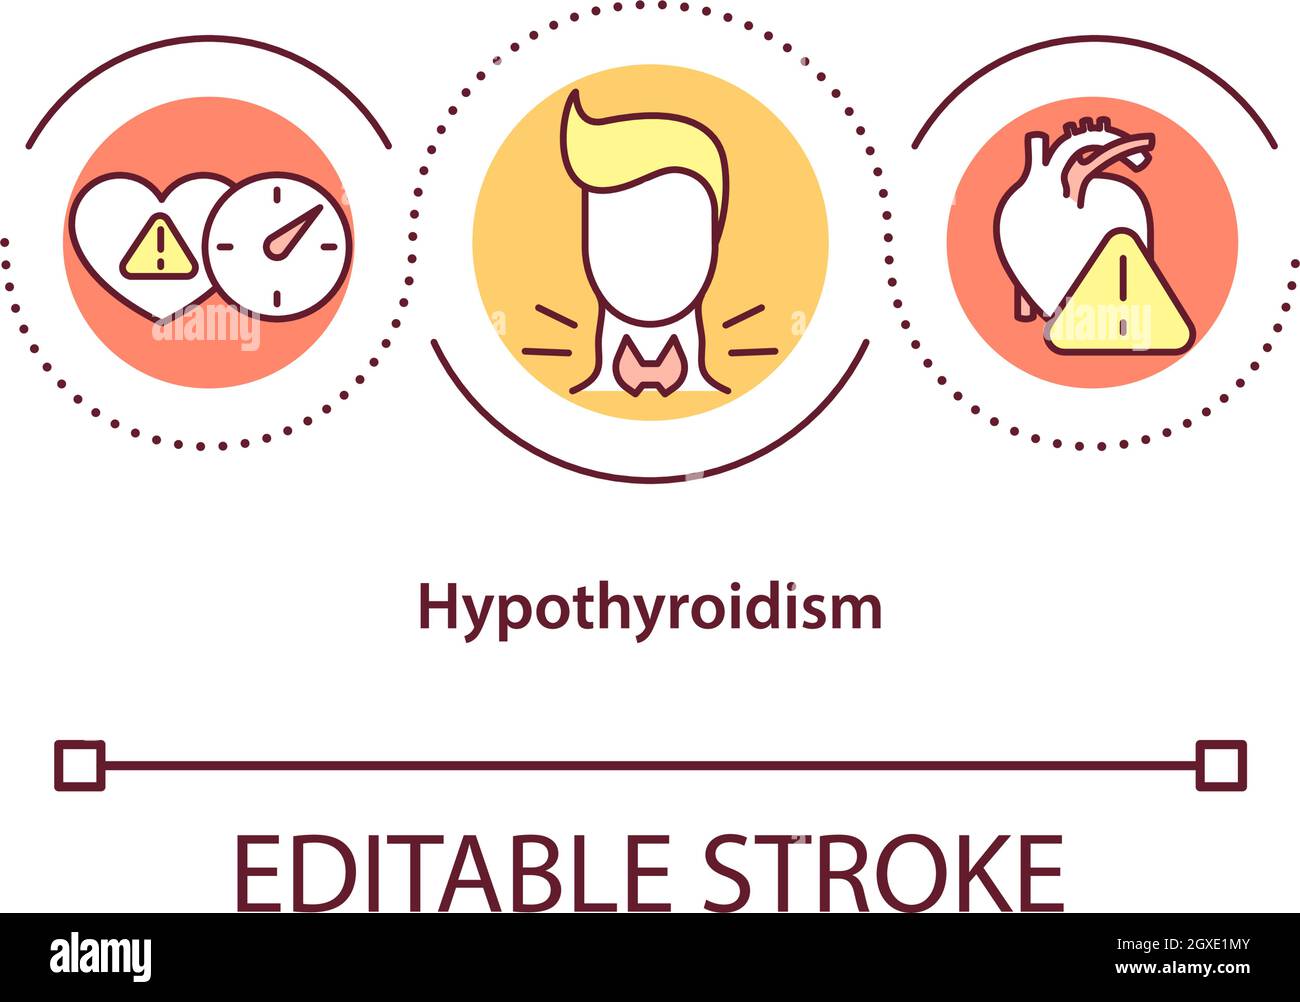 Hypothyroidism concept icon Stock Vector